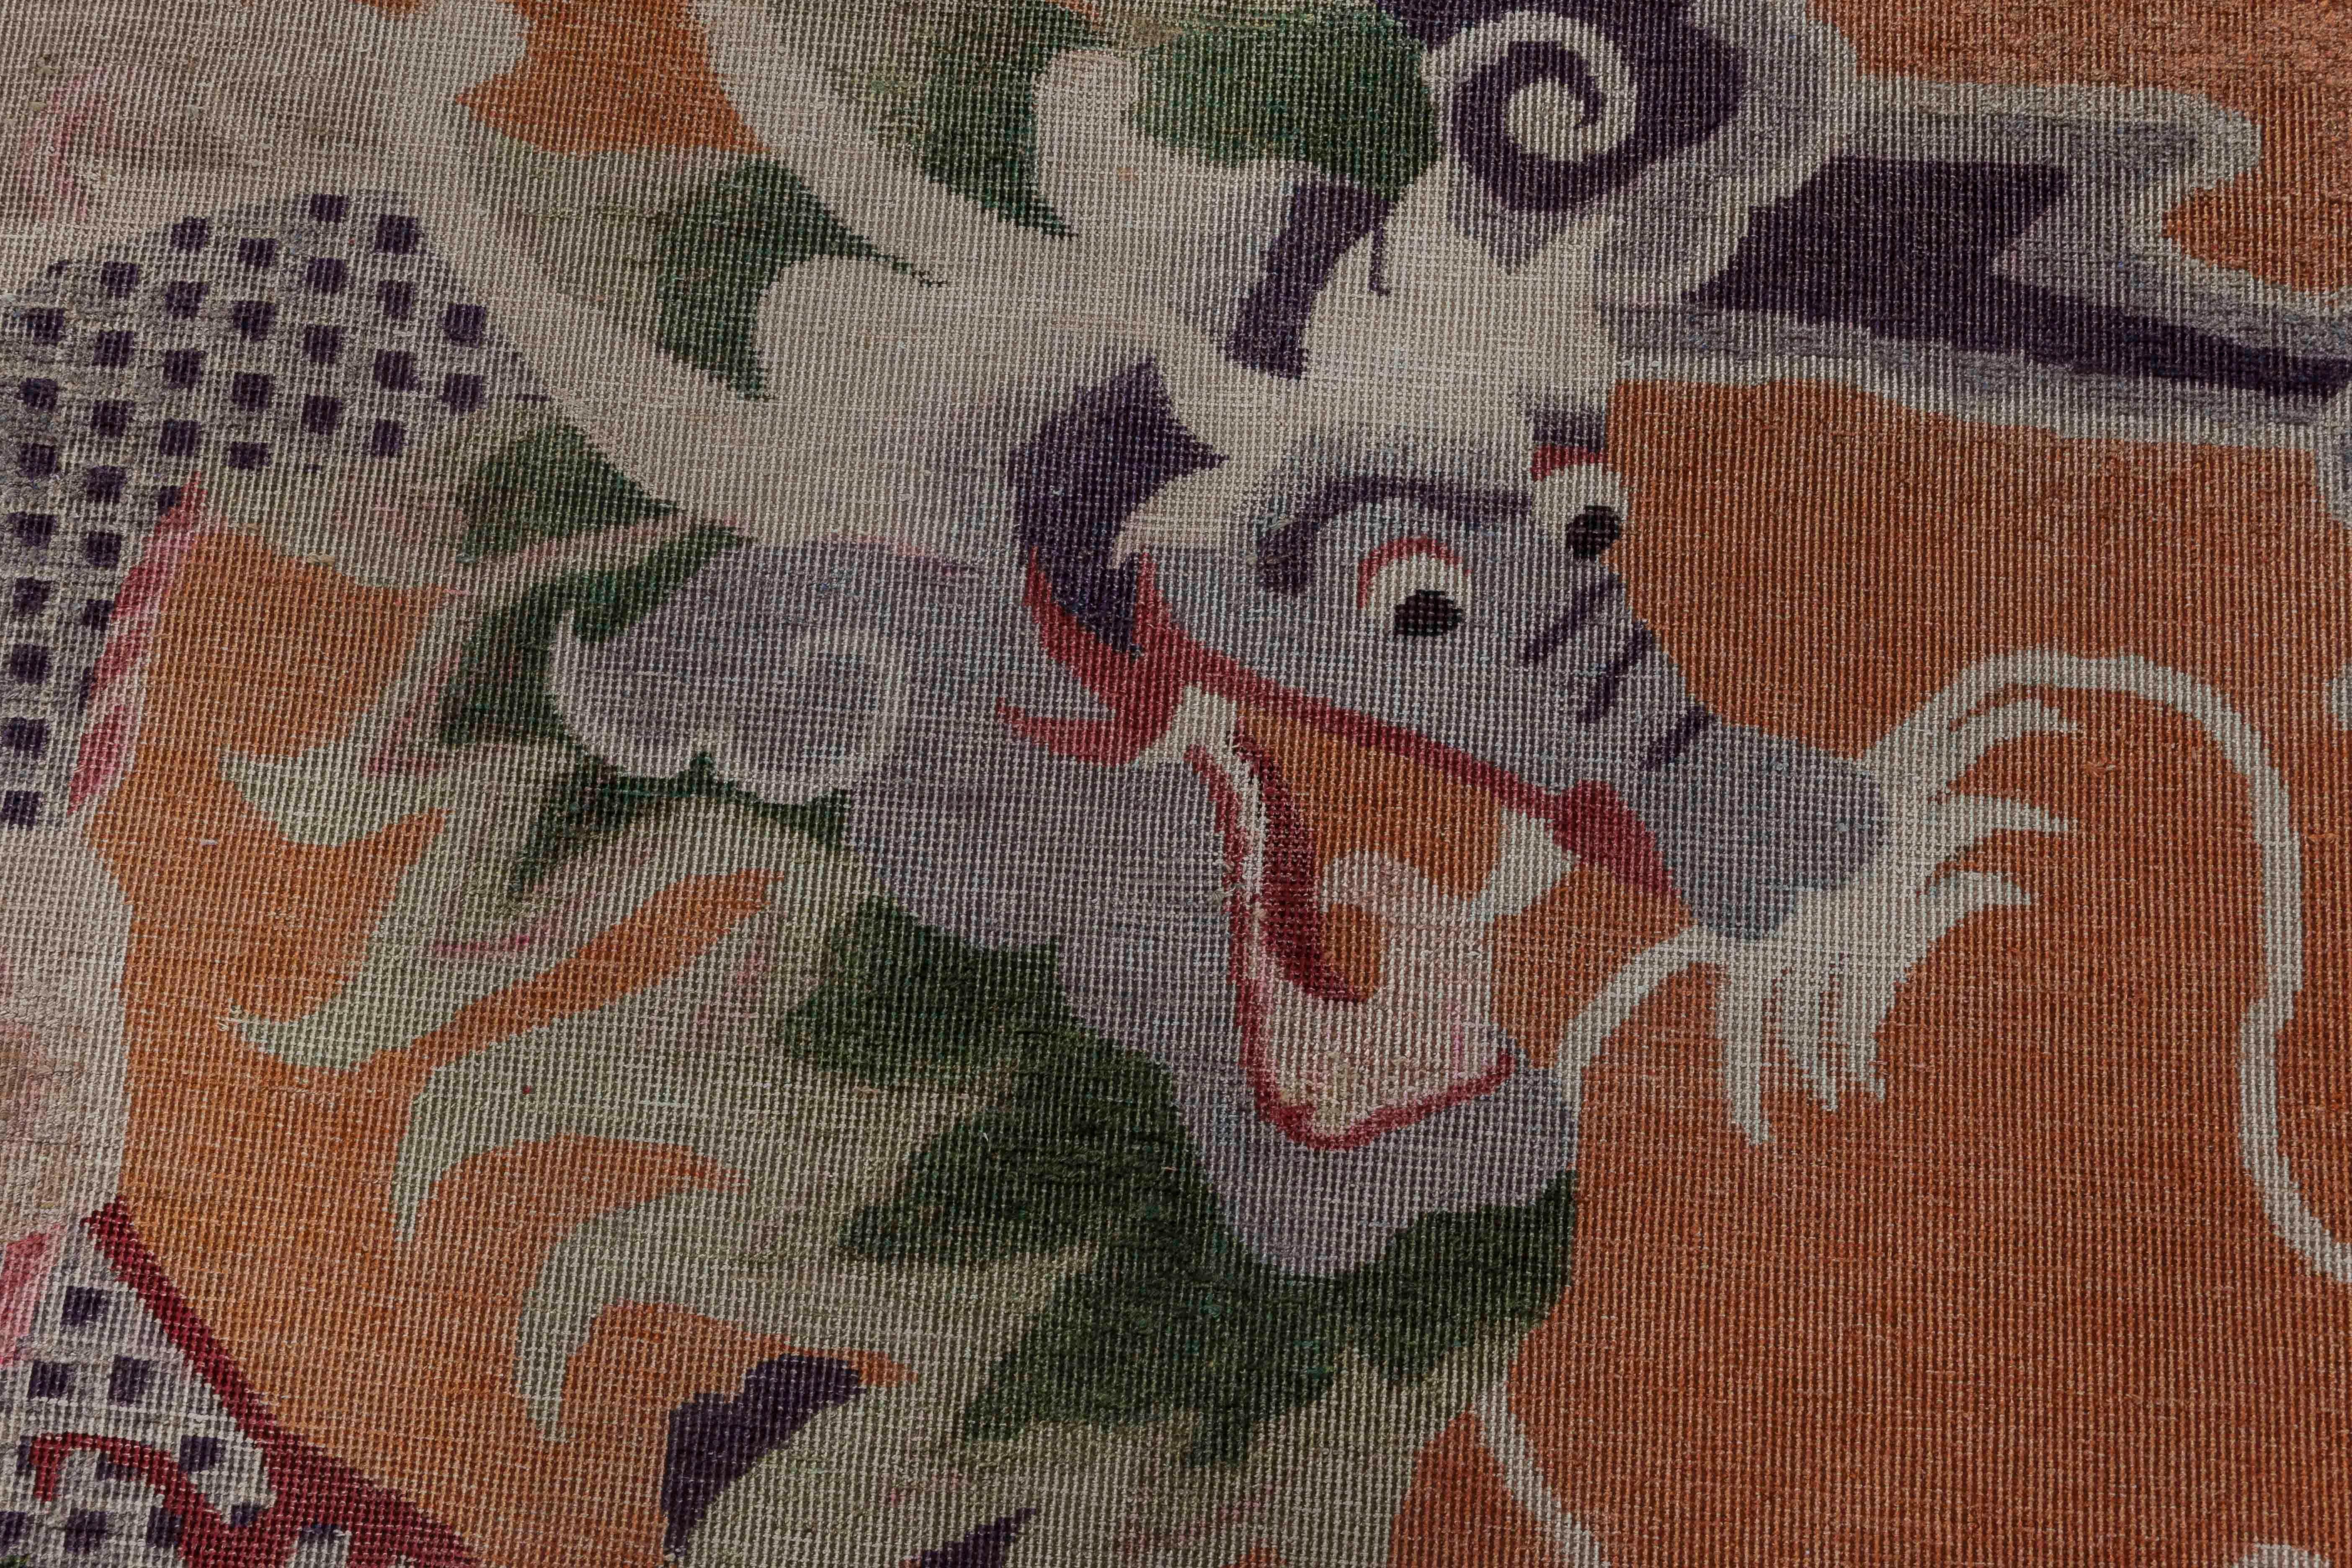 Authentic Chinese handmade silk rug.
Size: 8'10